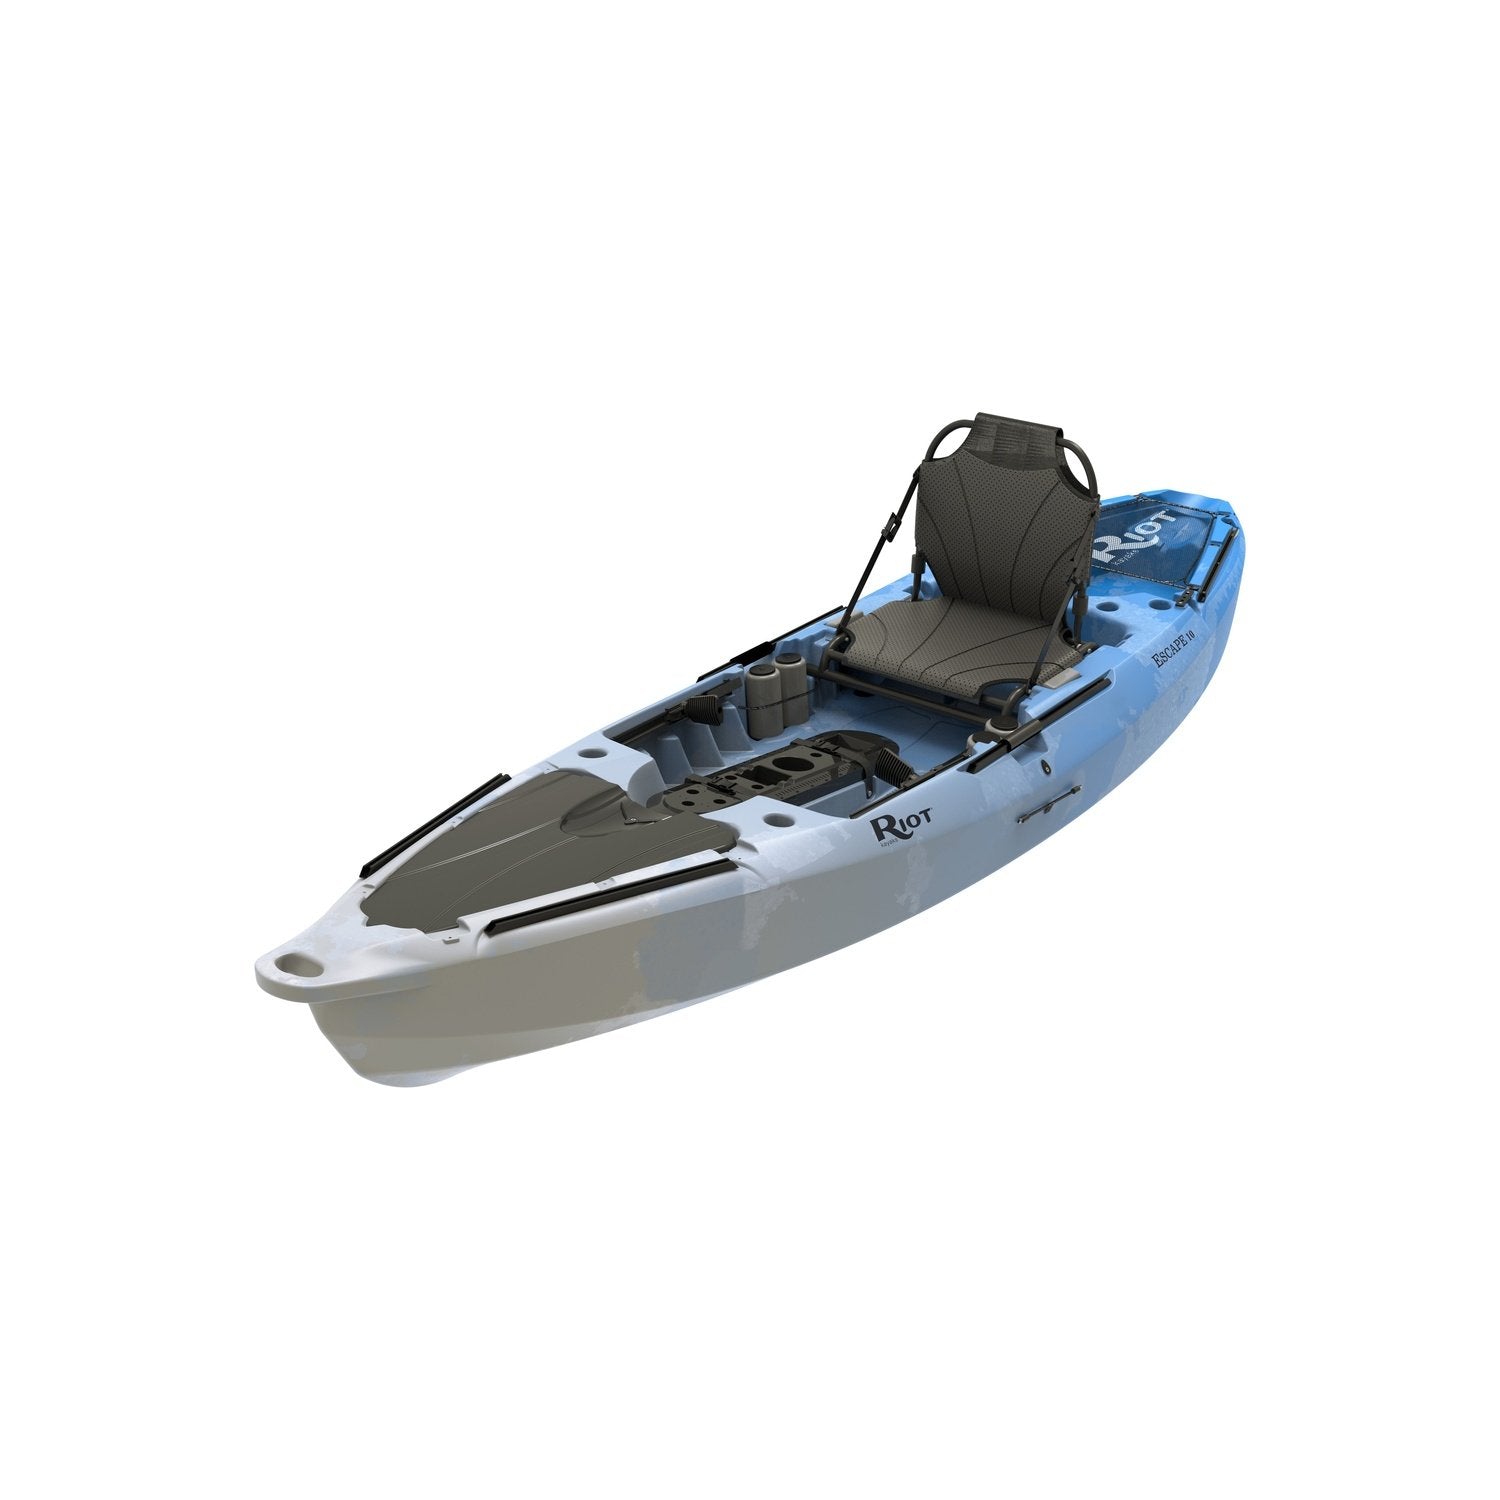  CORHAD 10pcs Kayak Accessories Fishing Boat